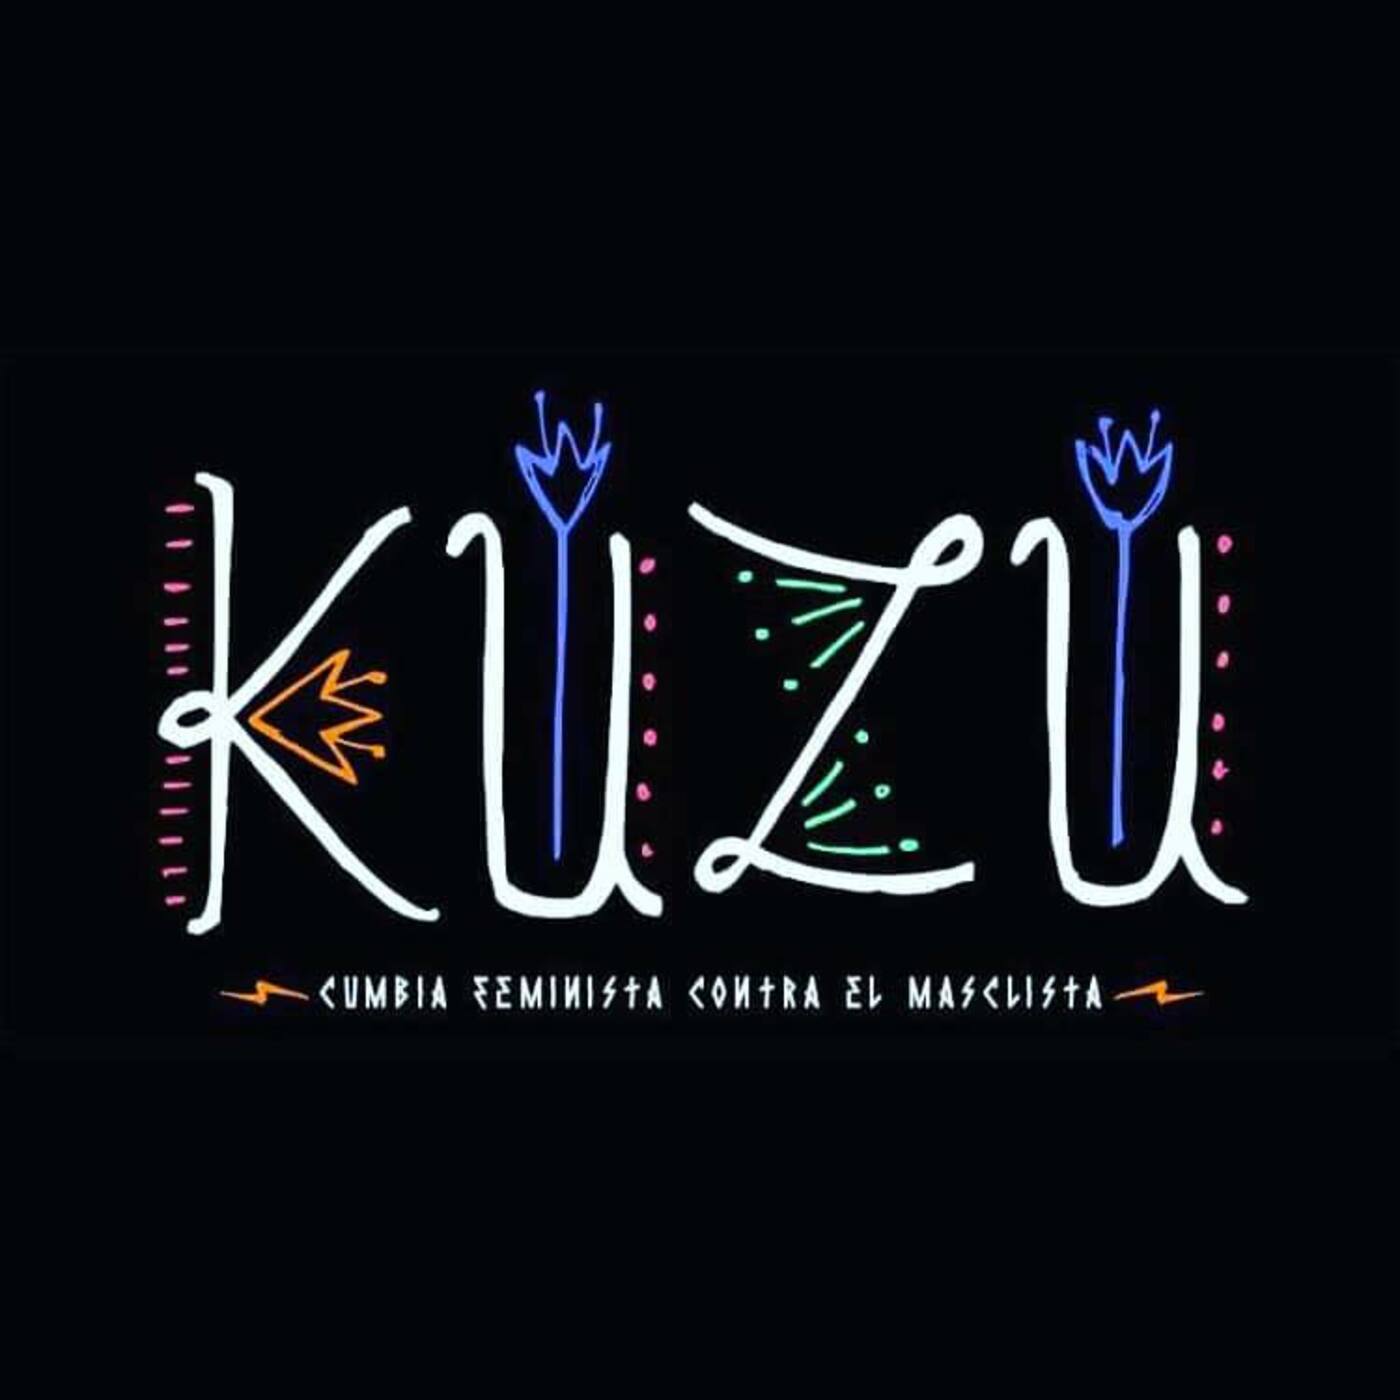 Kuzu | musica en valencià